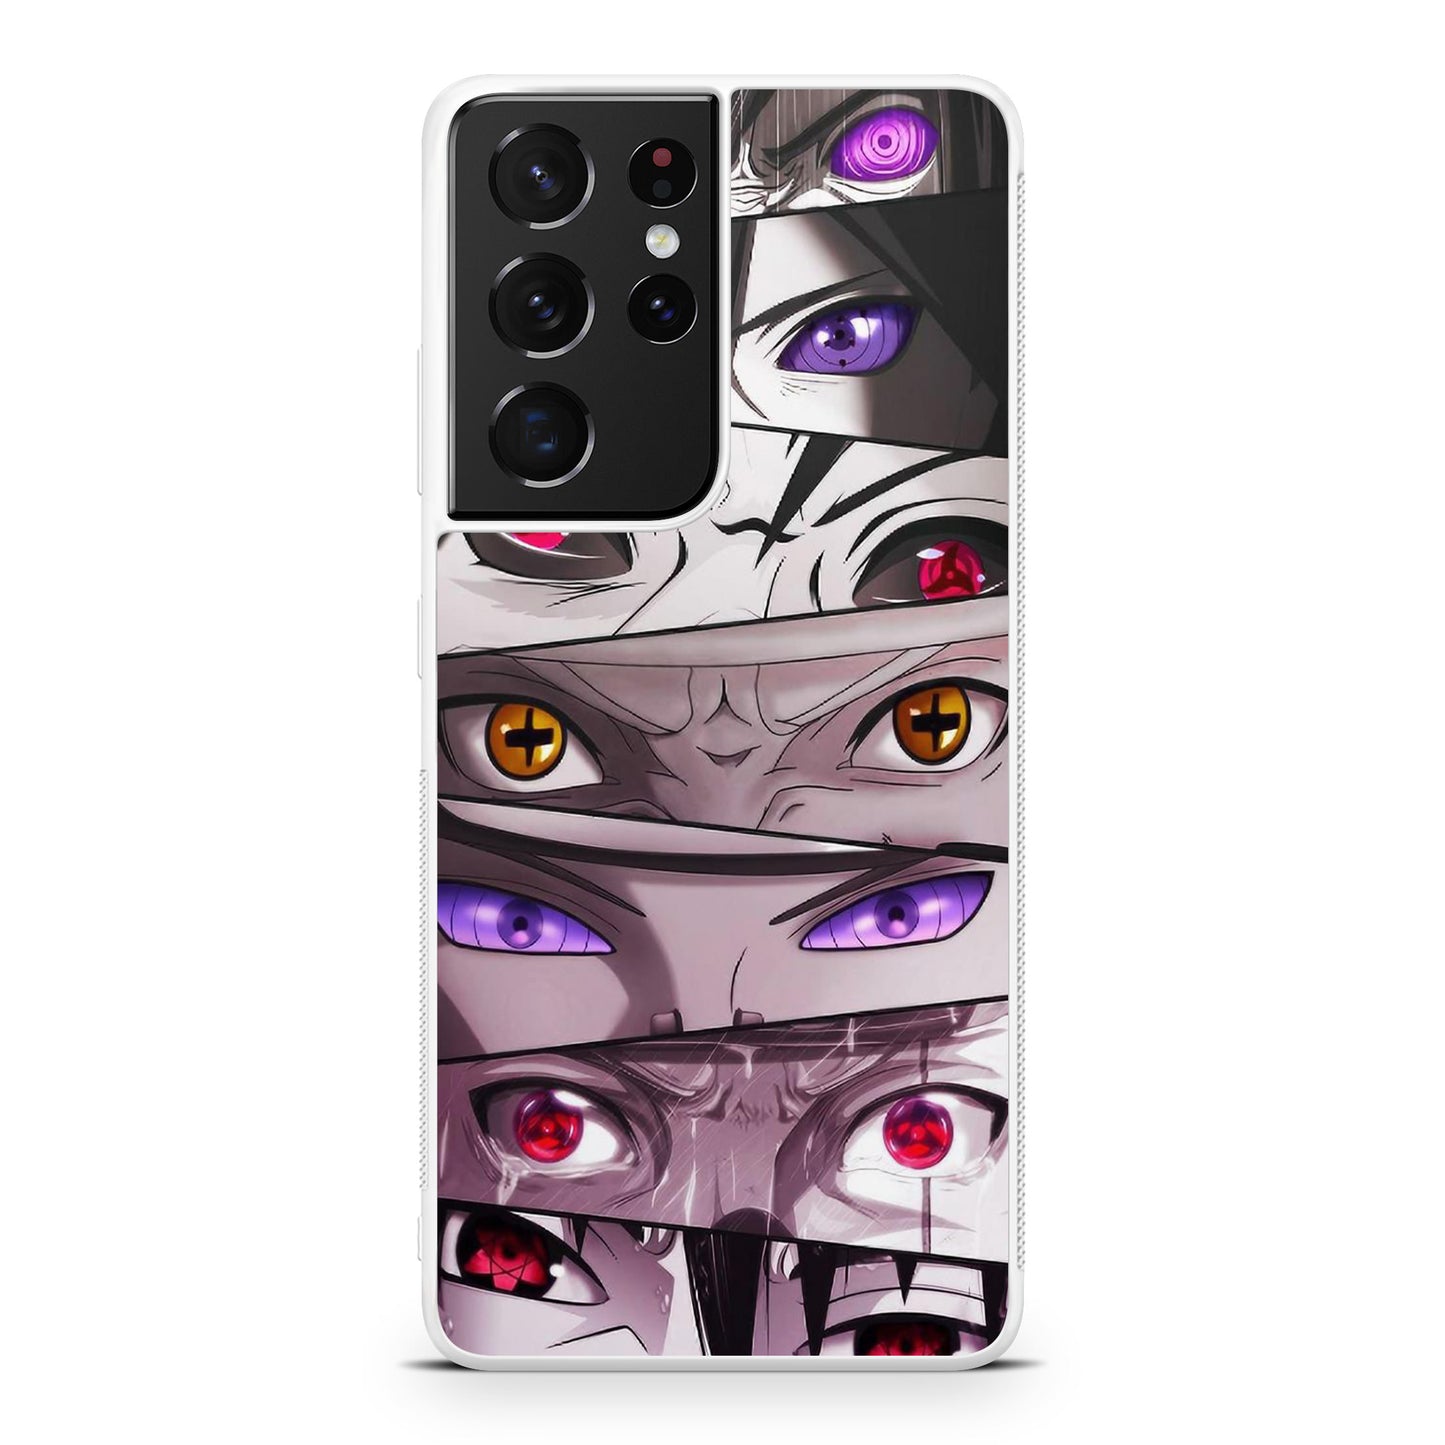 The Powerful Eyes Galaxy S21 Ultra Case